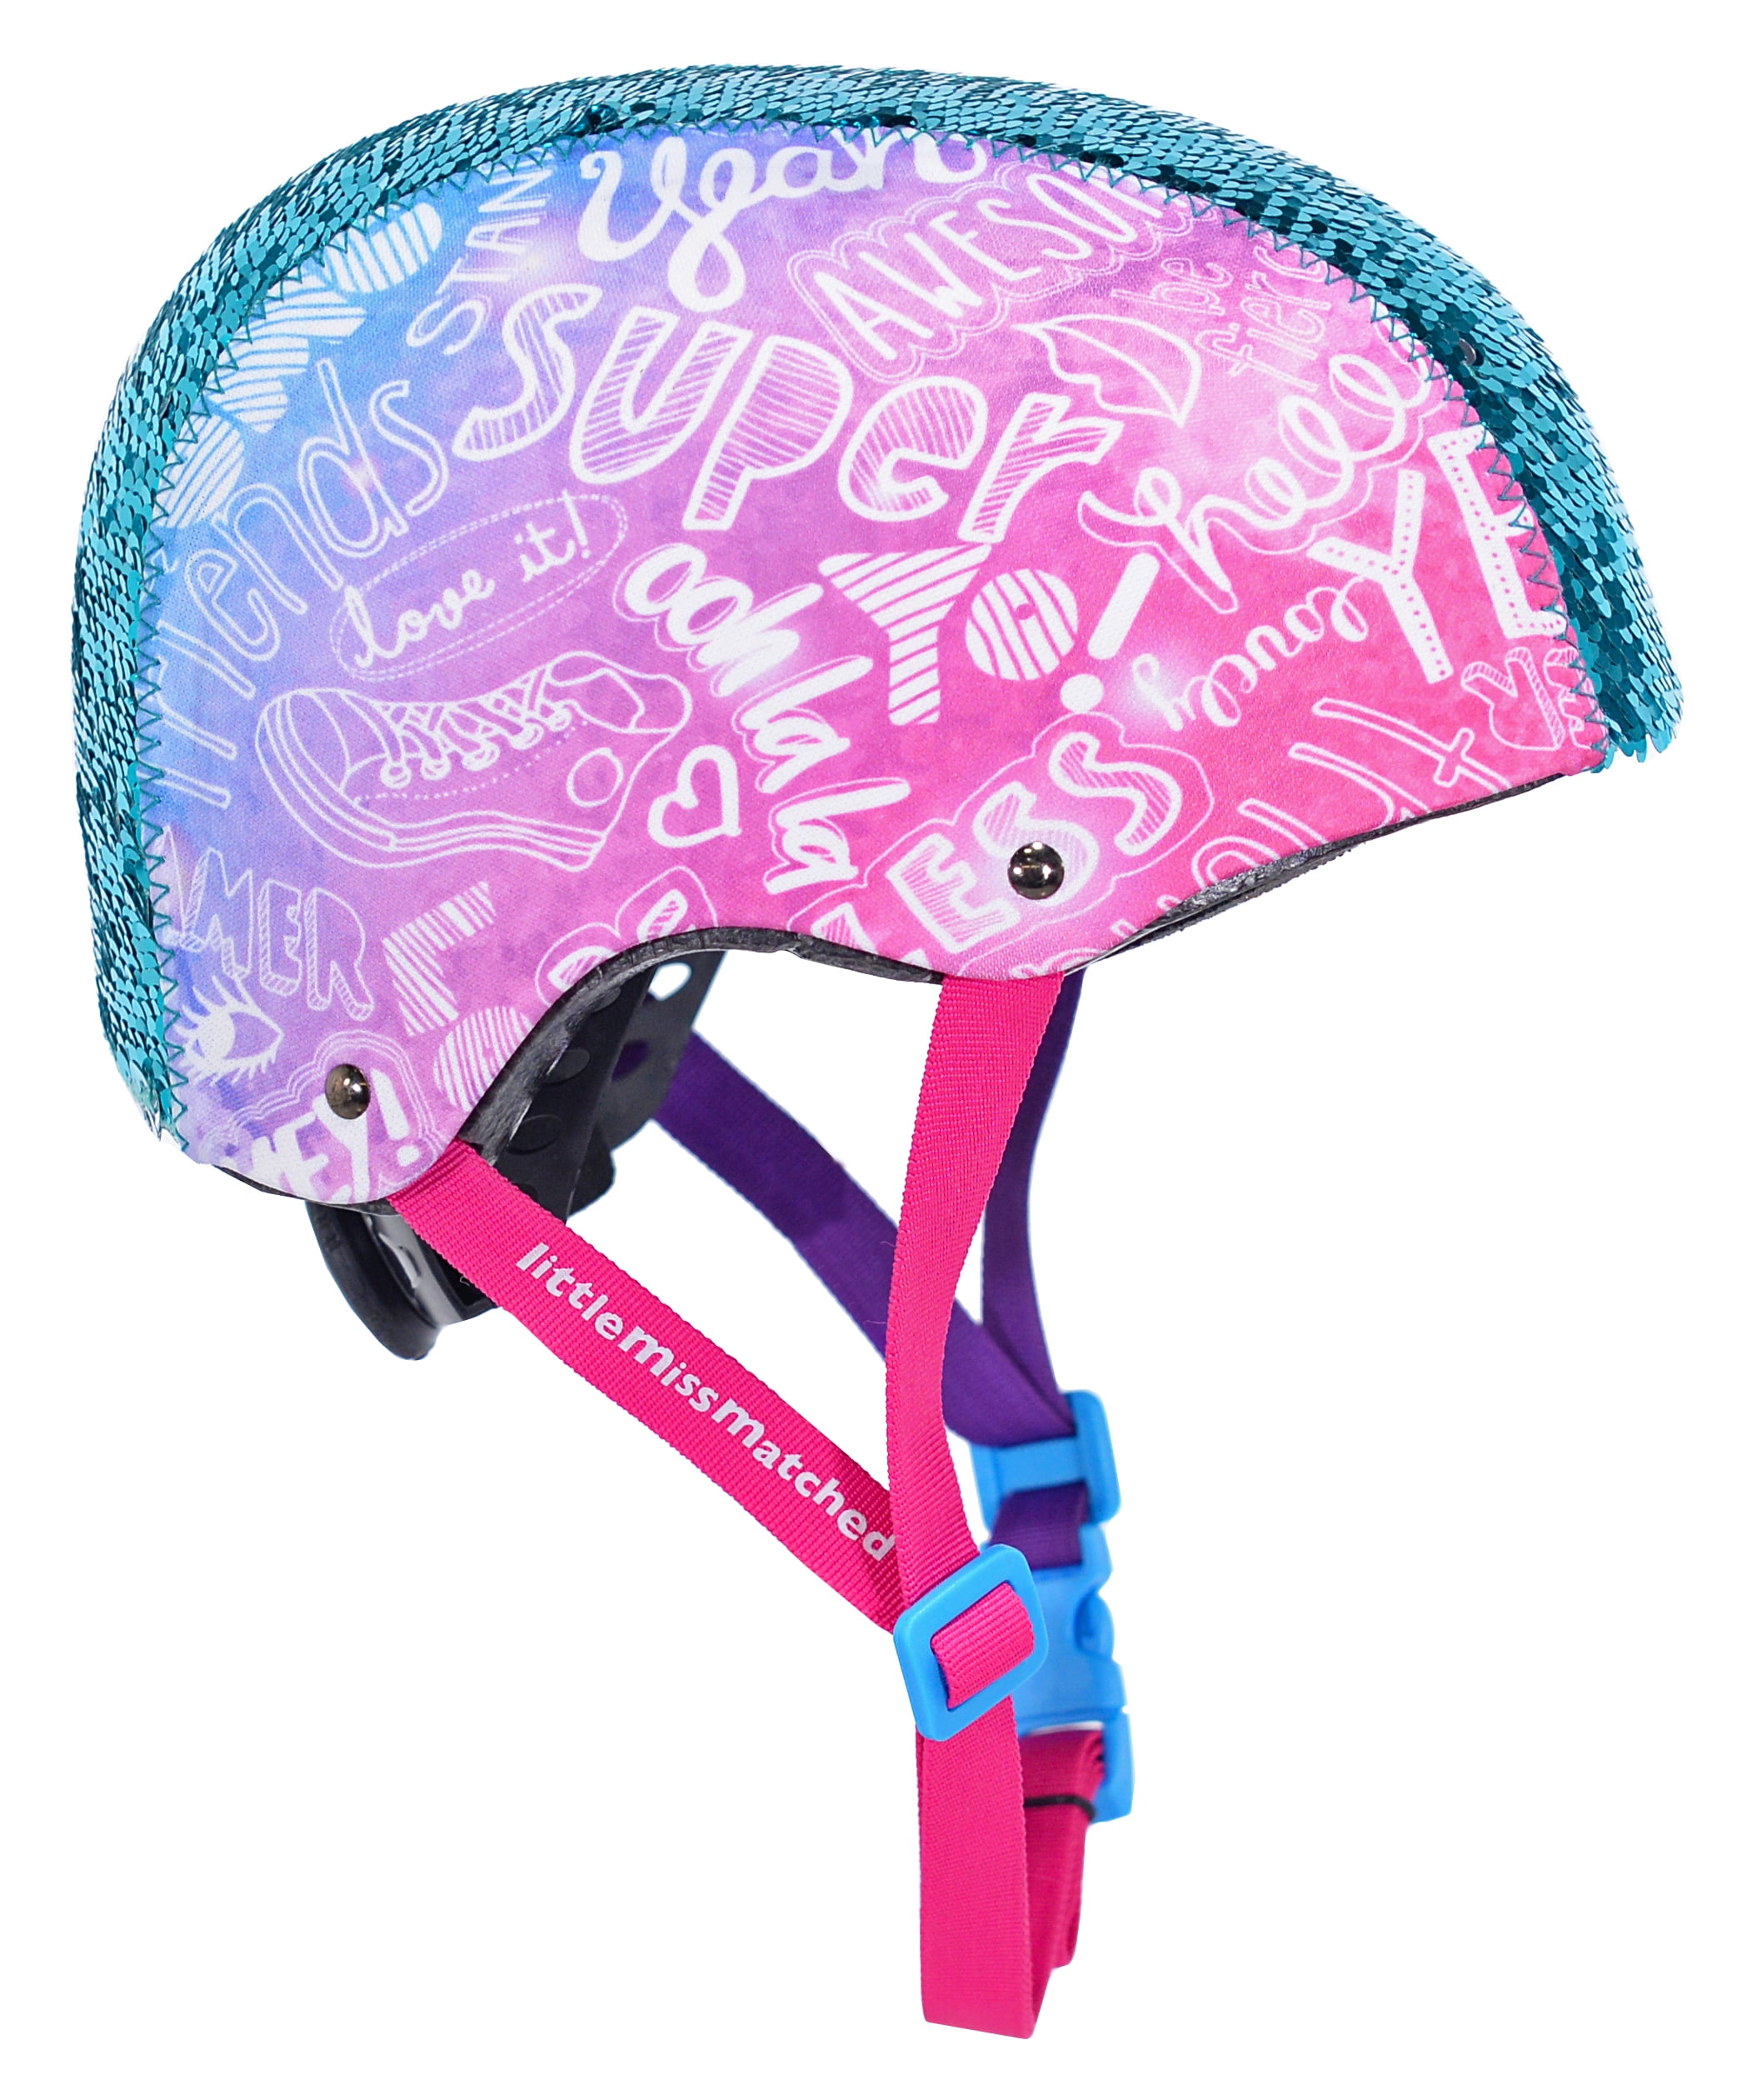 NEW Raleigh Mystery Pink Flower Girls Kids Childs Cycle Bike Helmet 52-56cm 